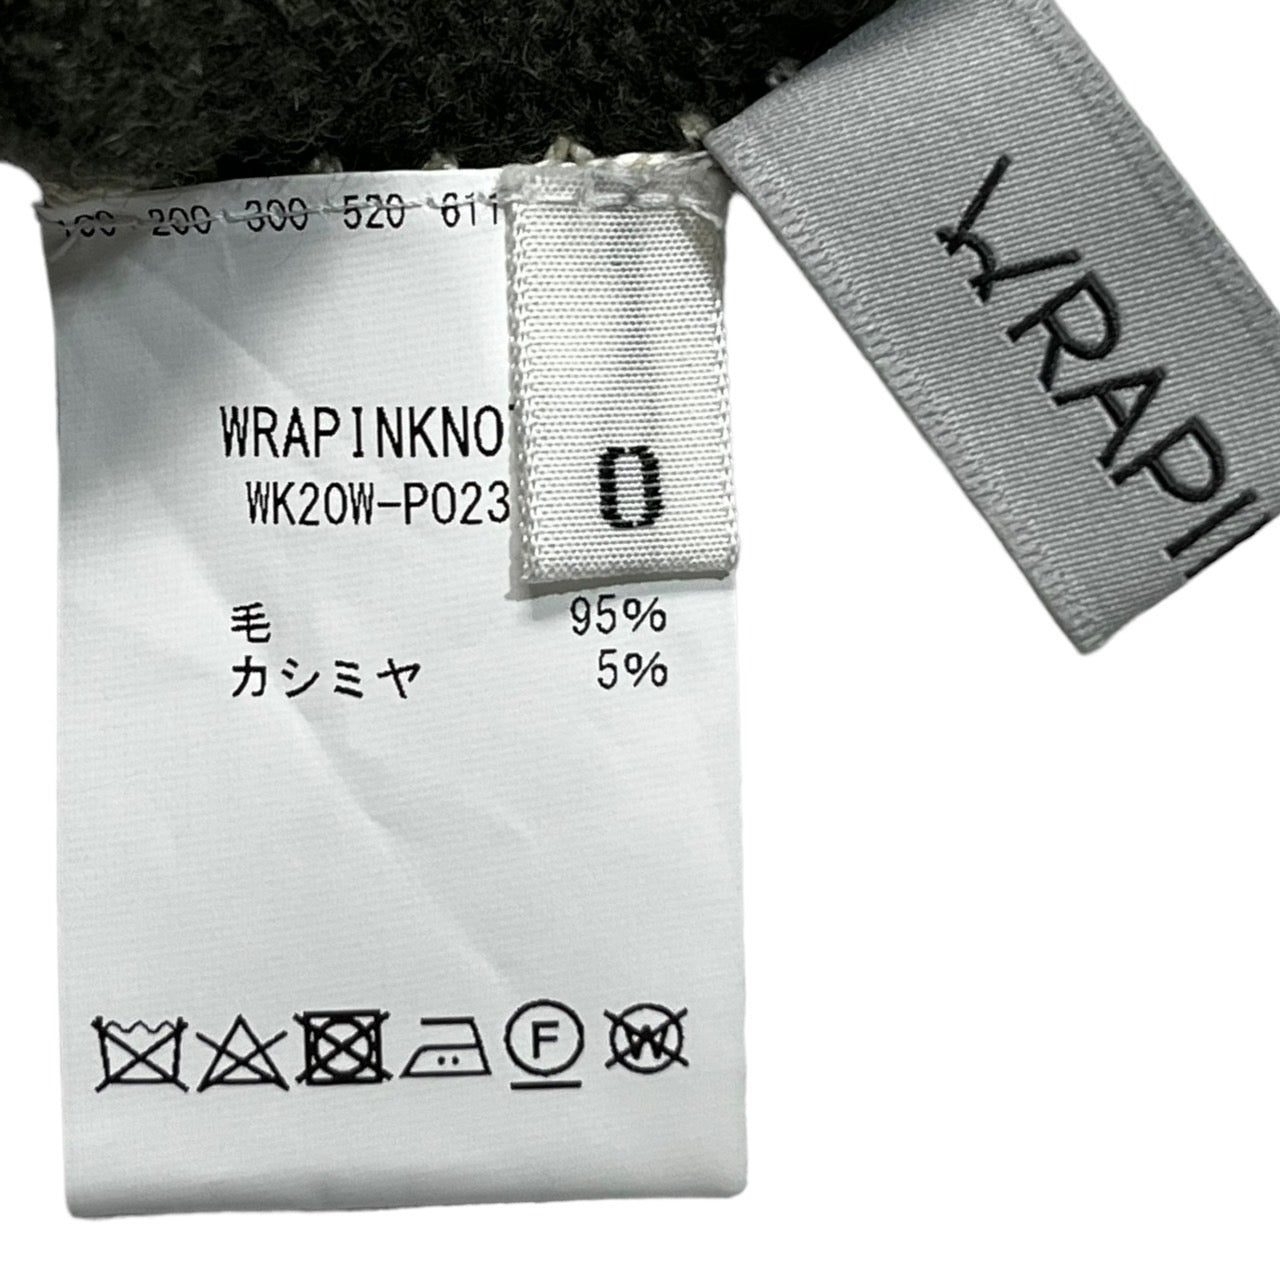 WRAPINKNOT(ラッピンノット) High neck stitch design knit ハイネック ステッチ デザインニット WK20W-P023 SIZE 0(FREE) カーキ×ホワイト